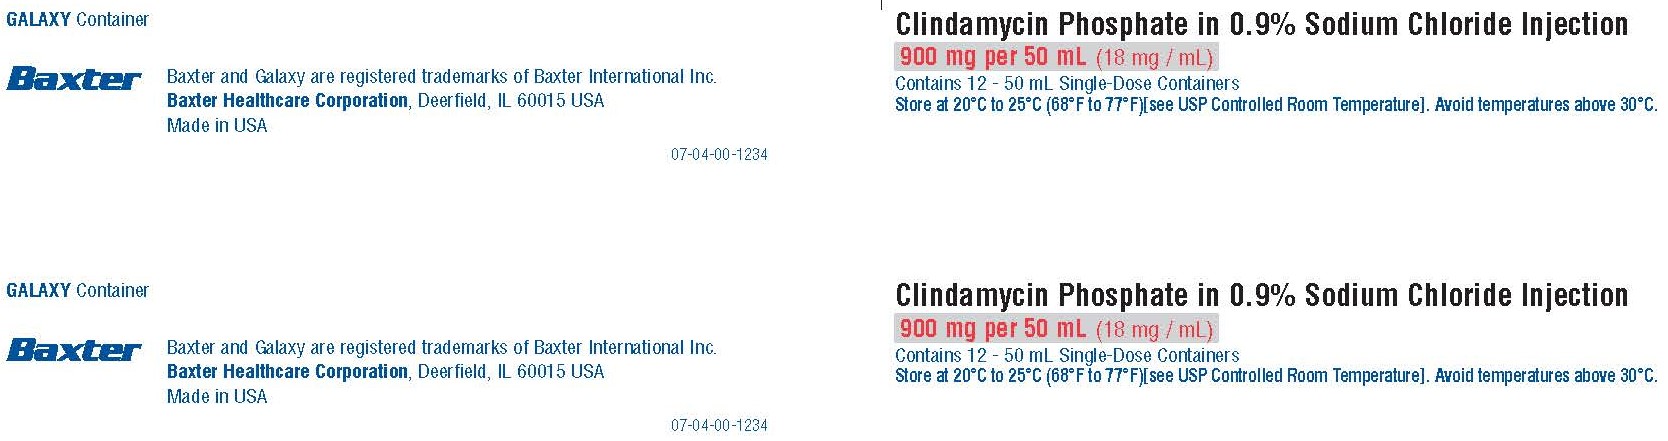 Clindamycin Phosphate in Sod. Chlor. carton NDC 0338-9553-24 panel 1 of 2